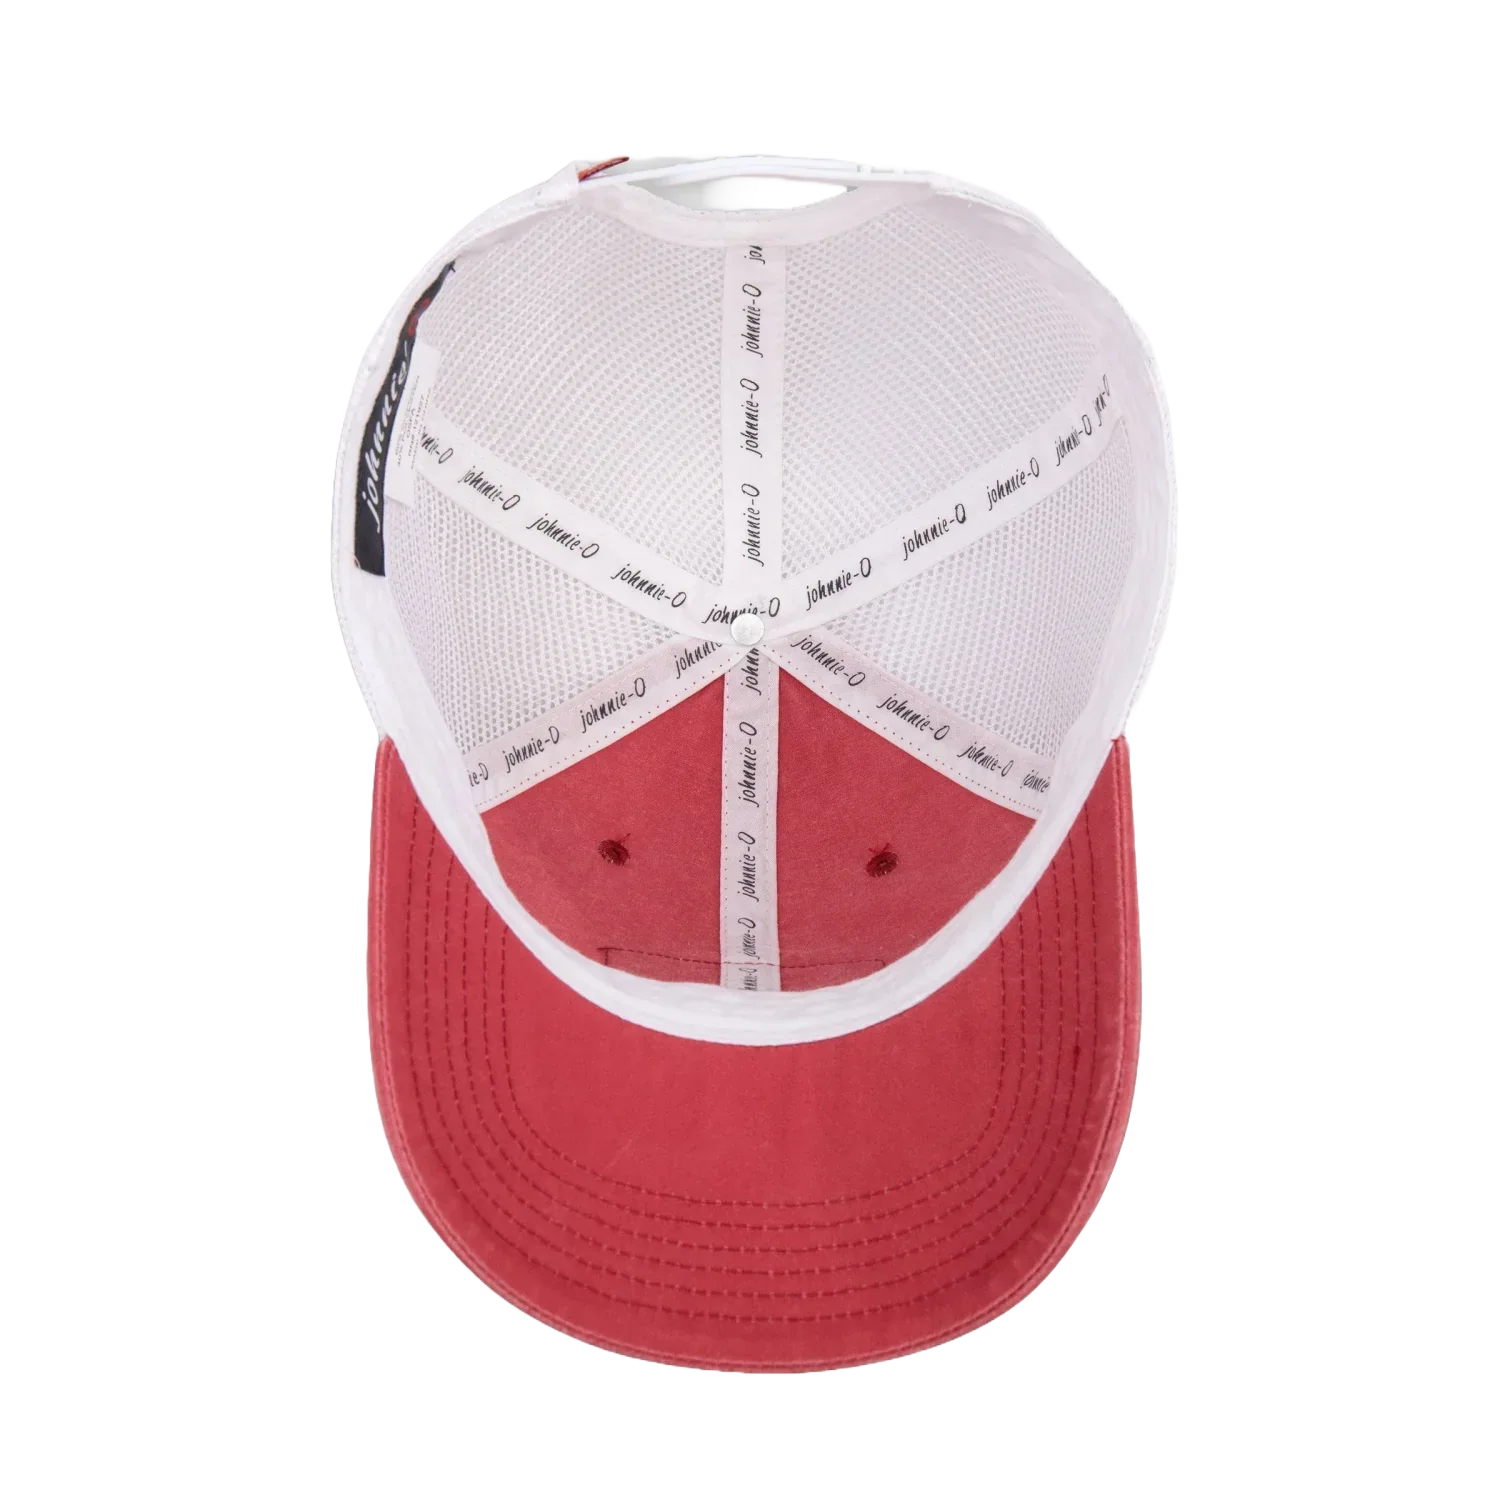 johnnie-O HATS - HATS BILLED - HATS BILLED Washed Deck Trucker Hat MALIBU RED OS